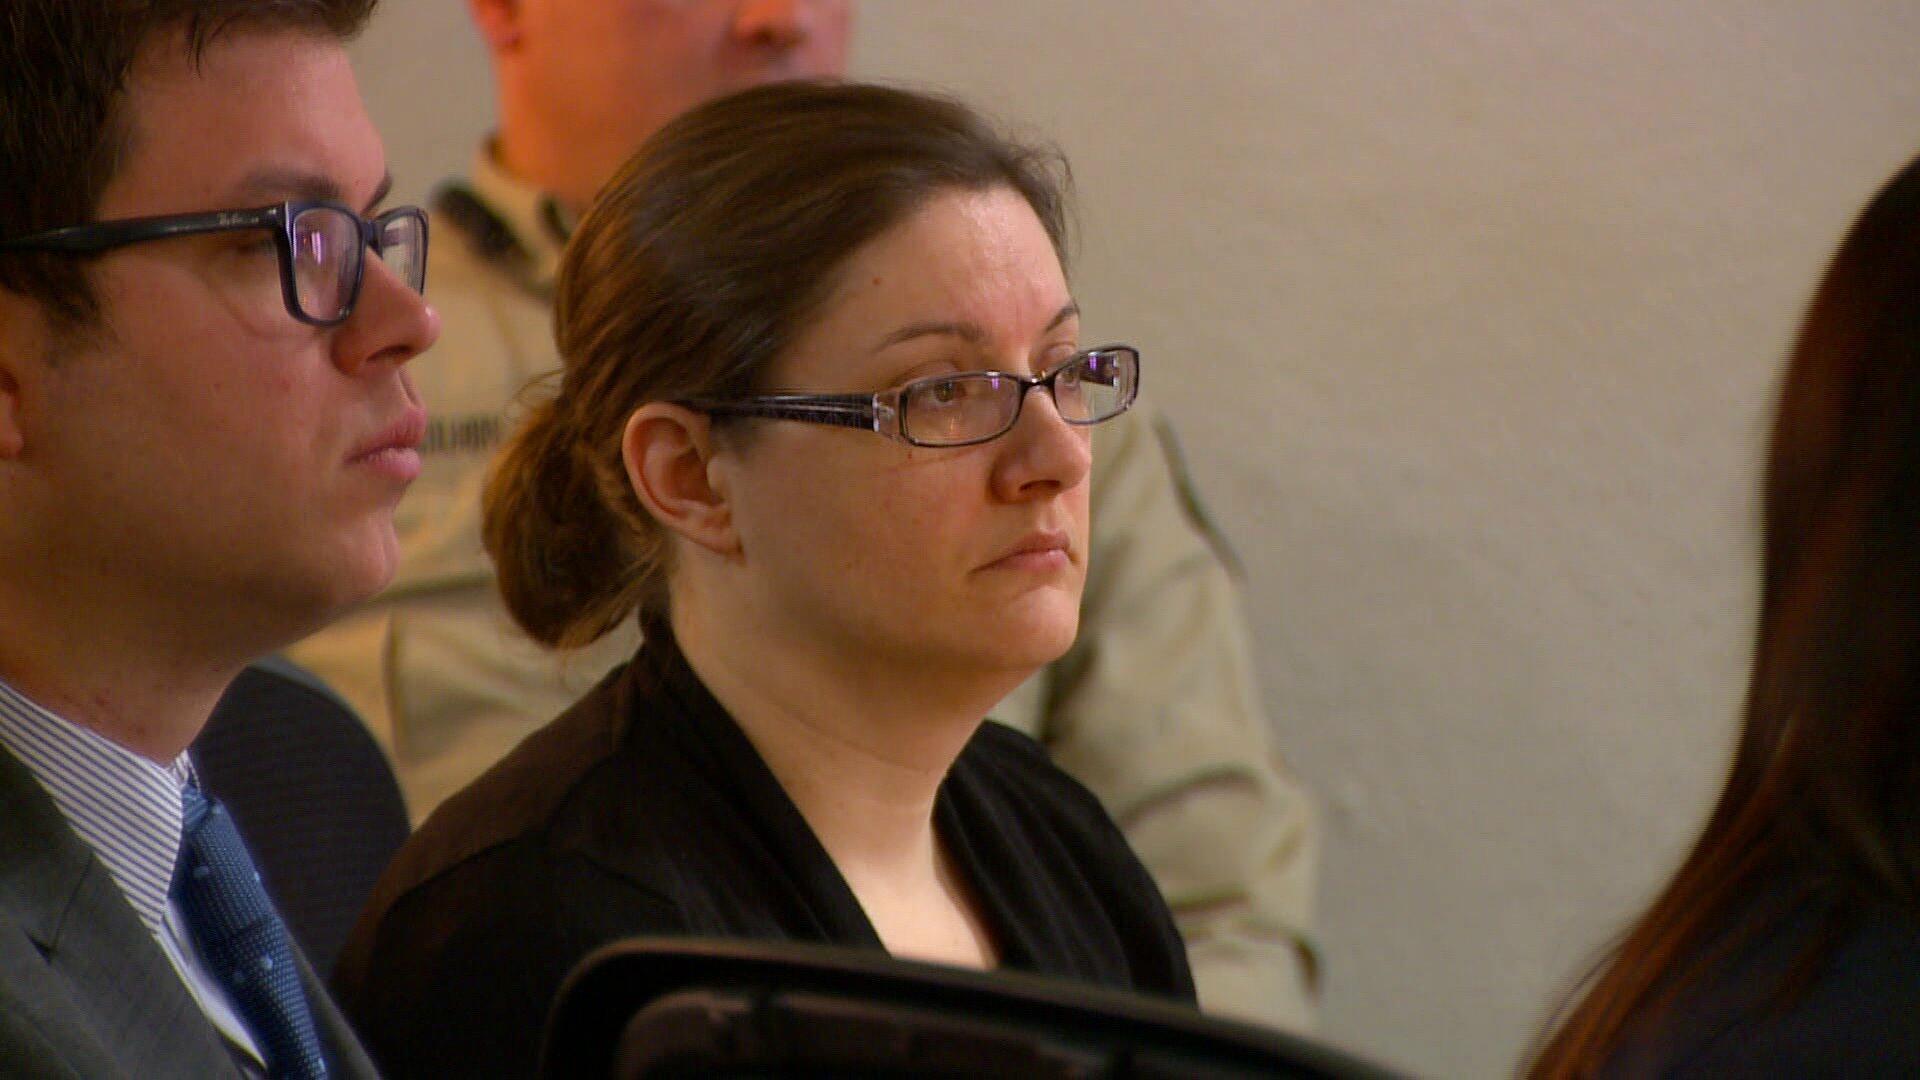 Nicole Finn gets life in prison for Murdering daughter Natalie - Thumbnail Image